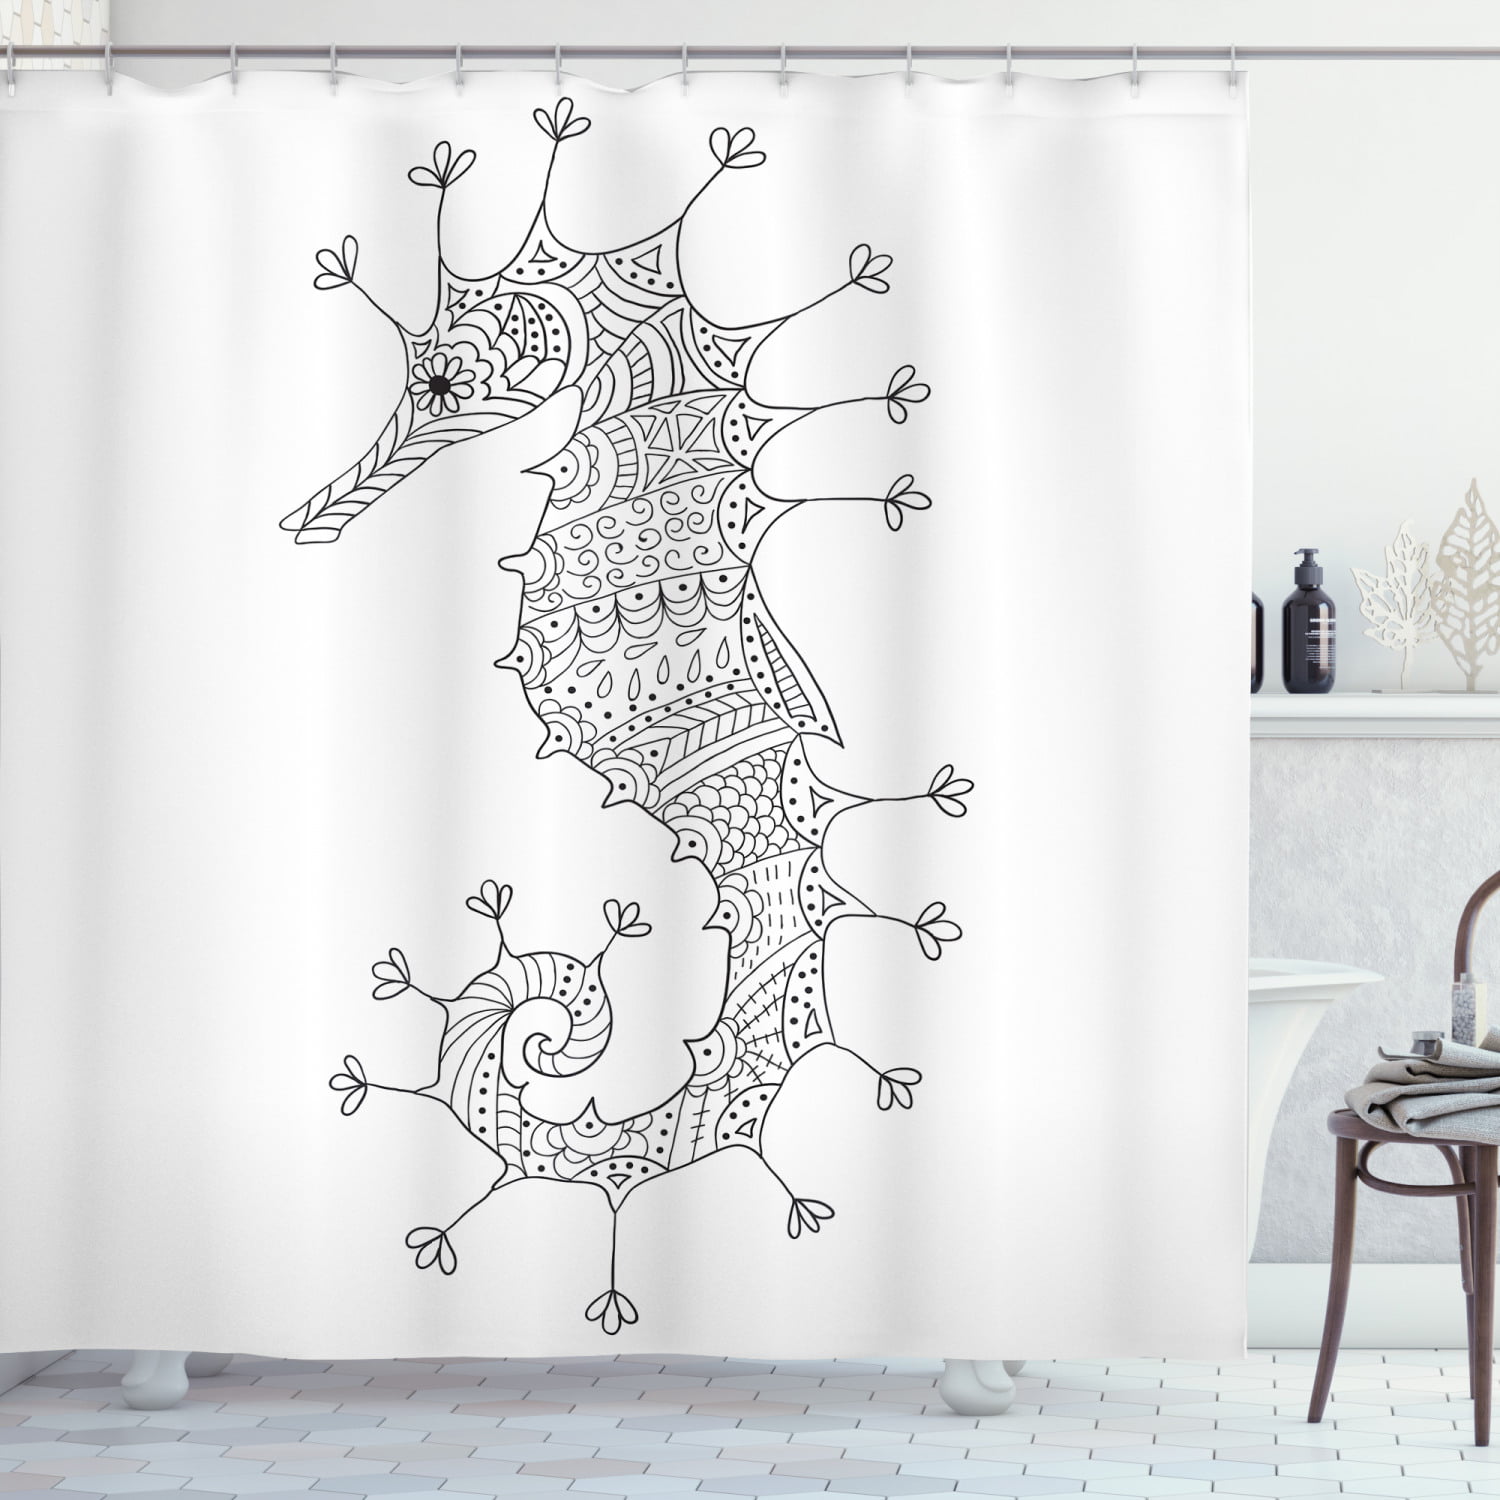 Seahorse Shower Curtain Ocean Animal Fabric Bathroom Decor with Hooks 72x72 in